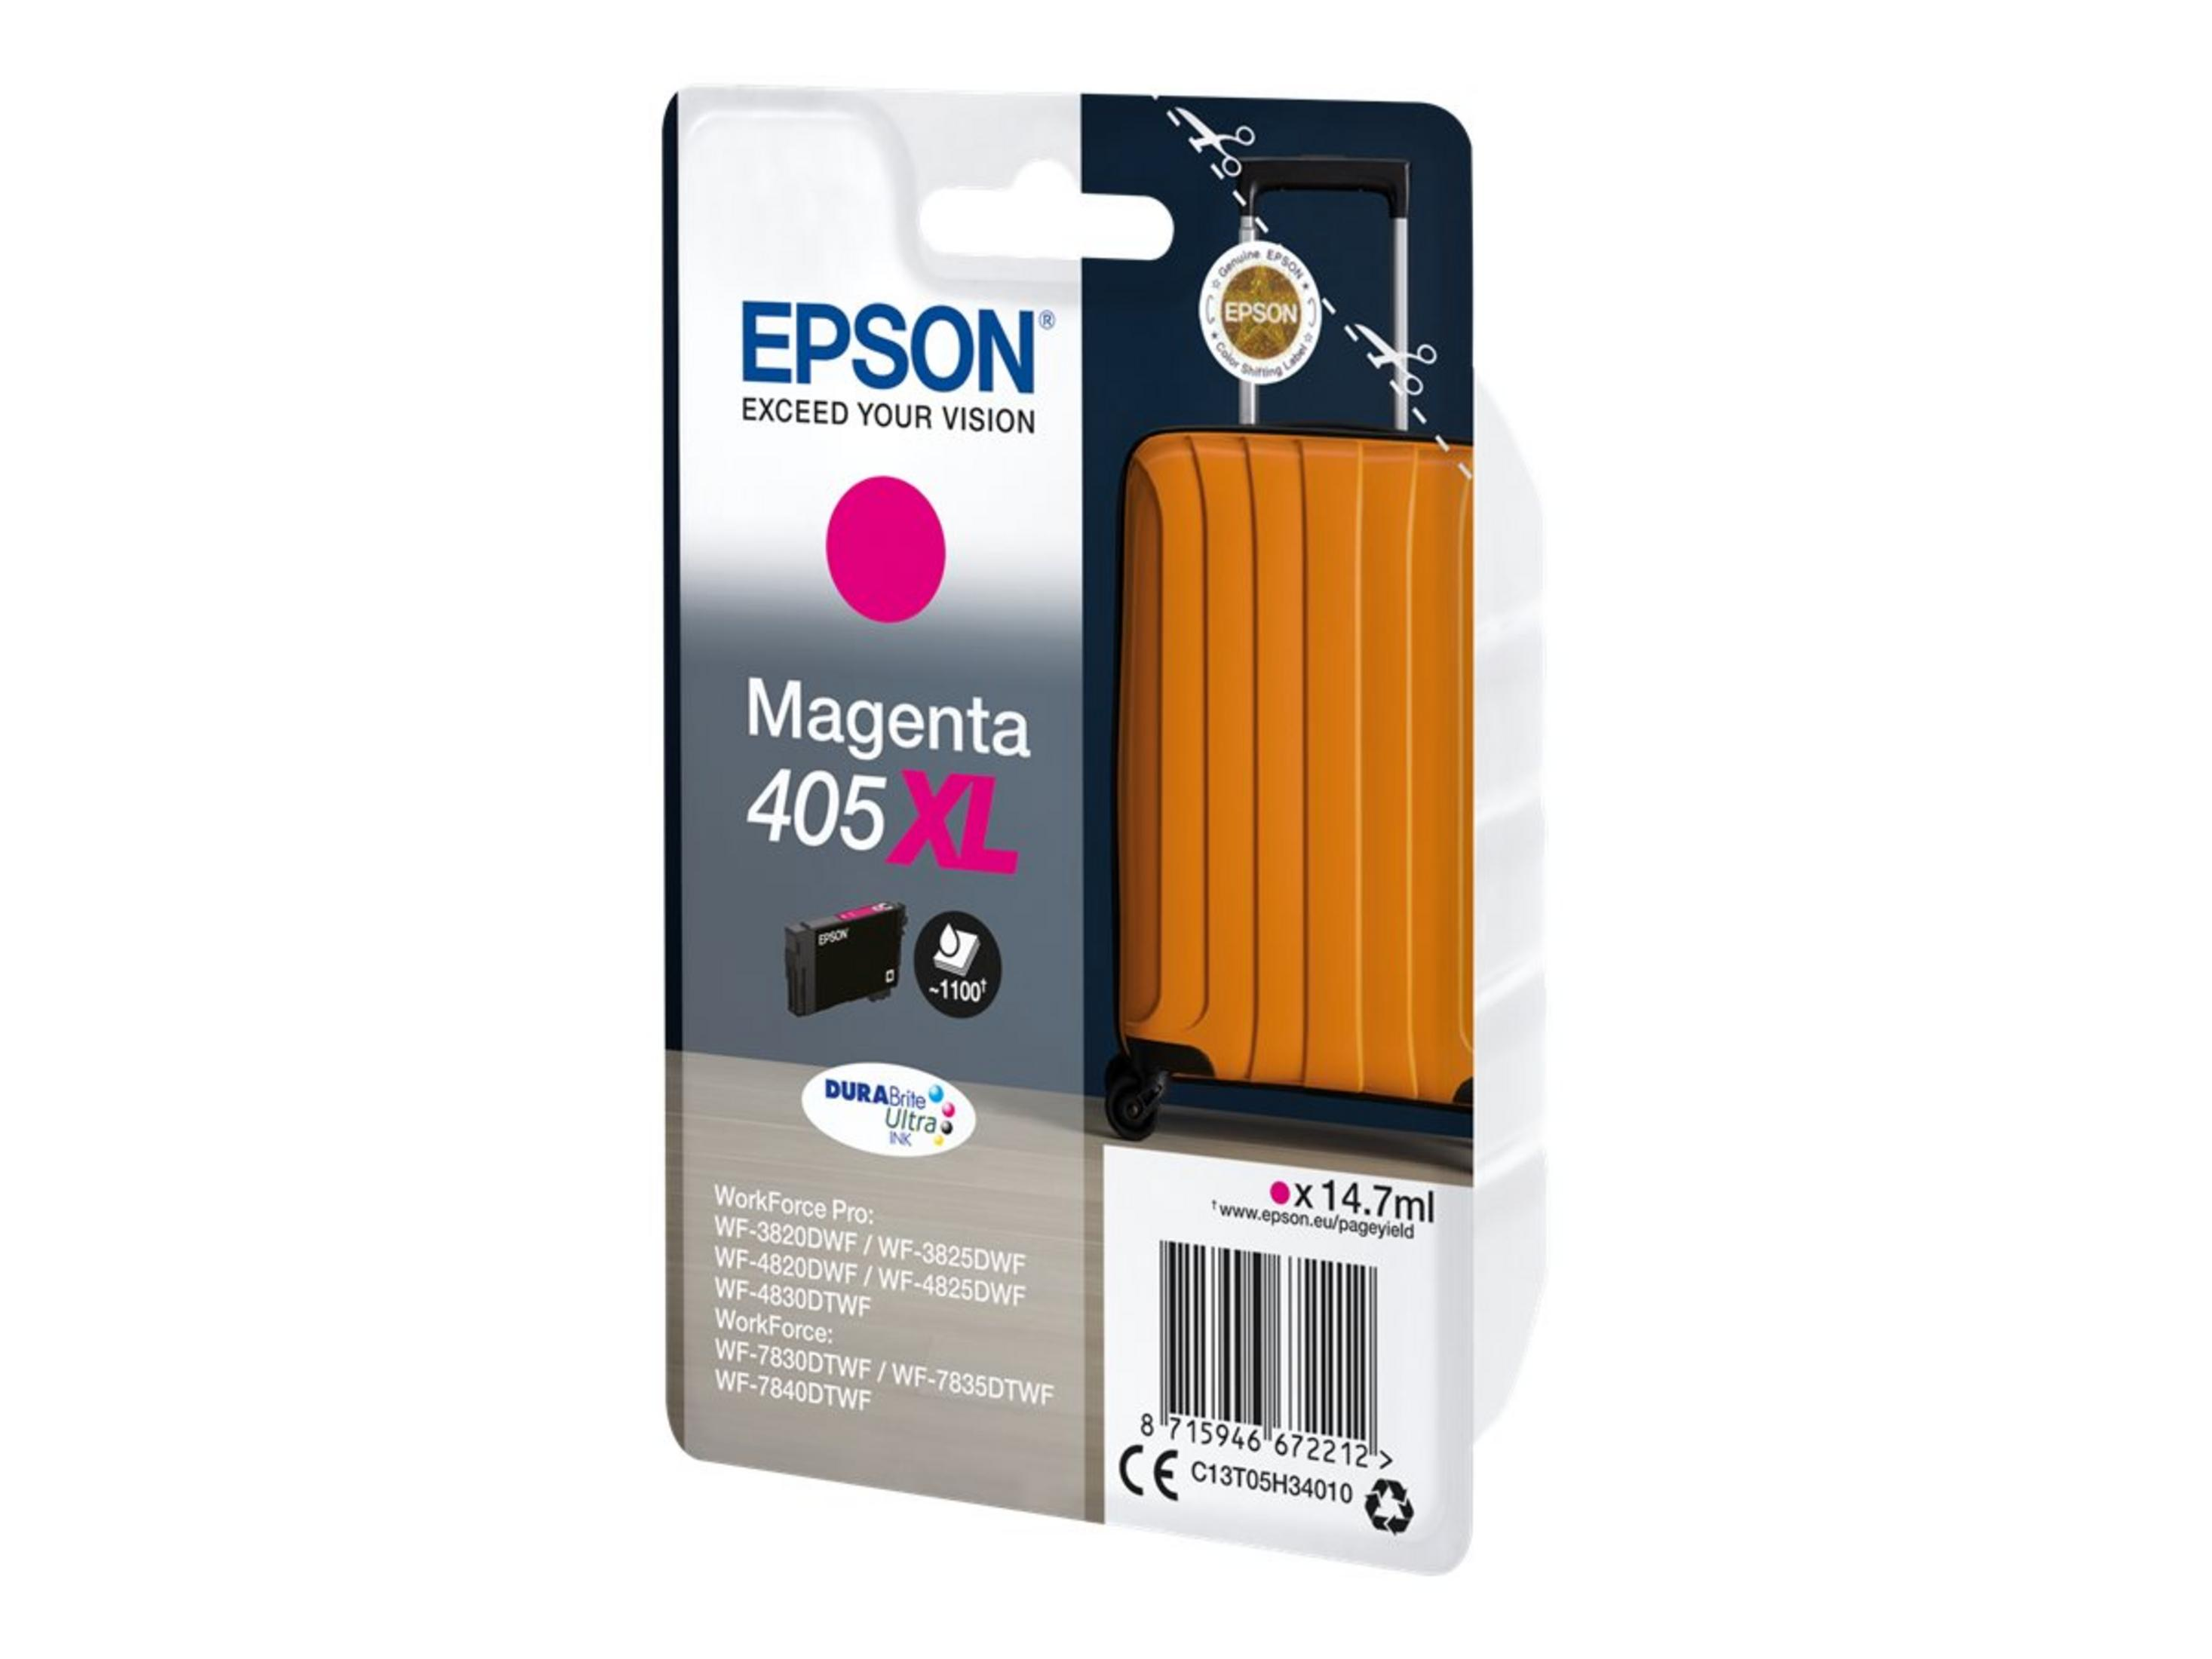 EPSON 405XL Tinte magenta (C13T05H34010)